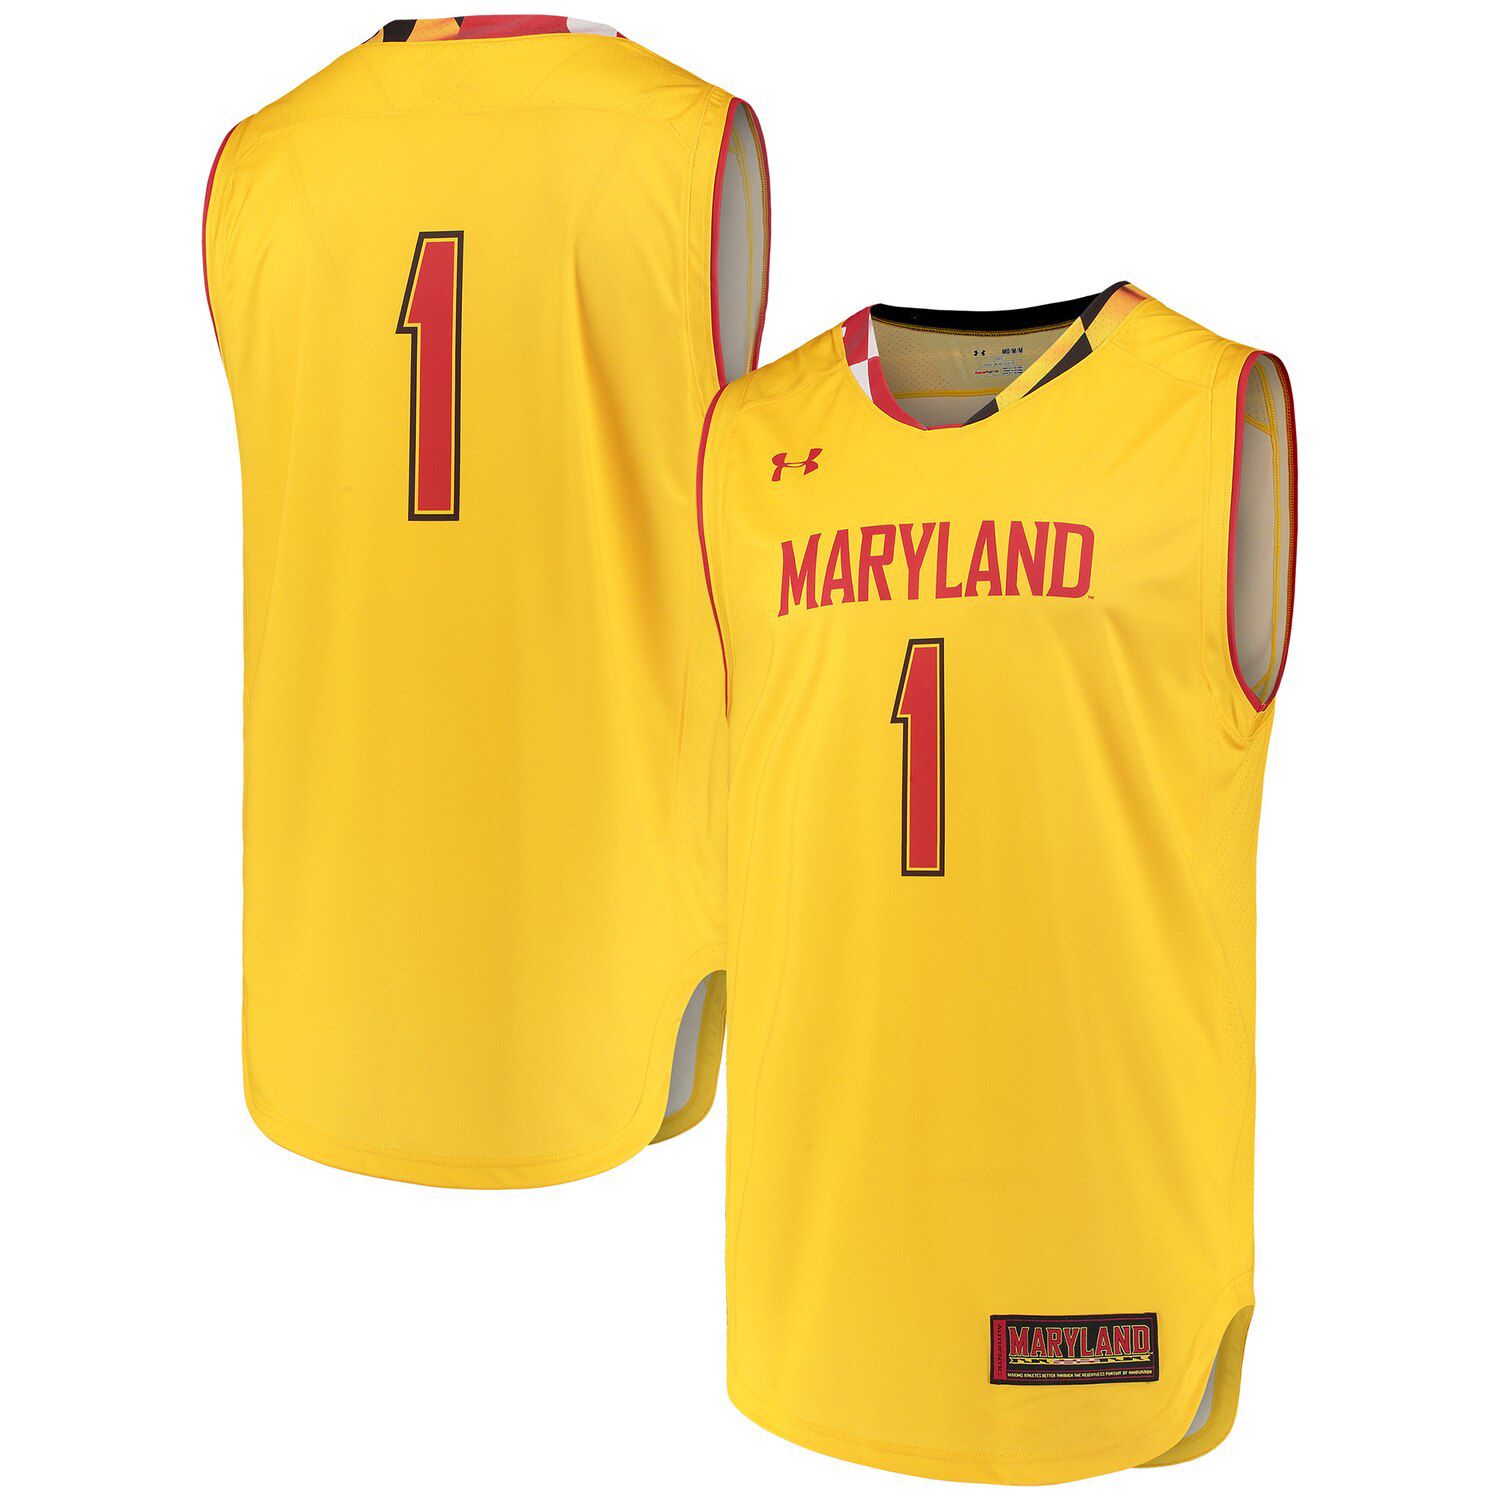 maryland basketball jerseys